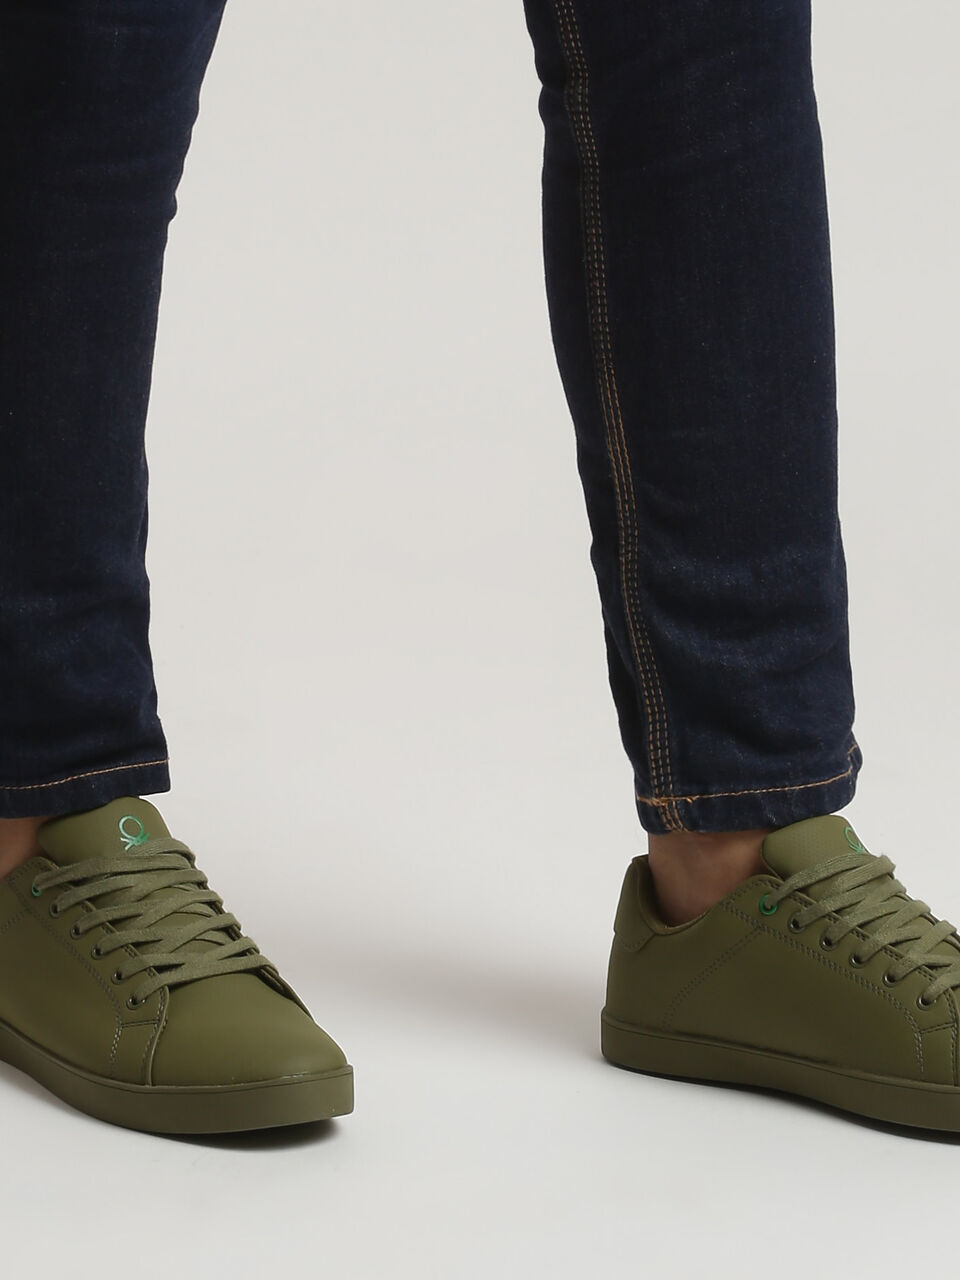 Benetton Olive Leather Imitation Sneakers - Green | Benetton